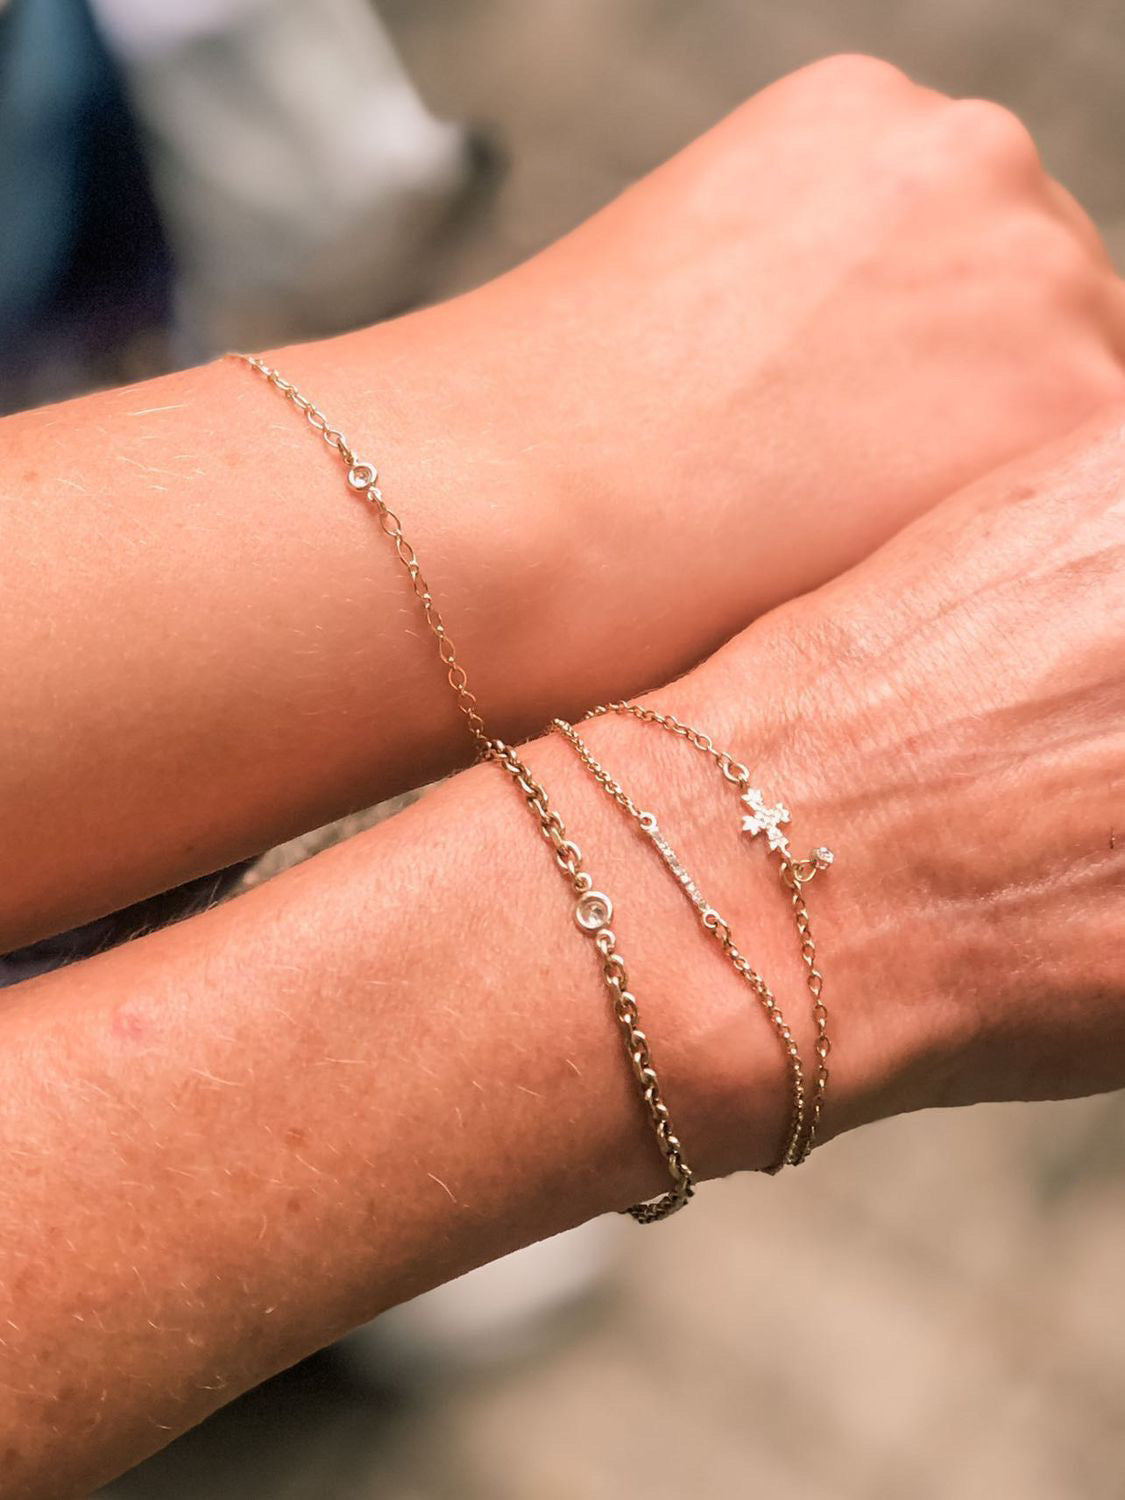 KB Design permanent bracelets at J. Landa Jewelry